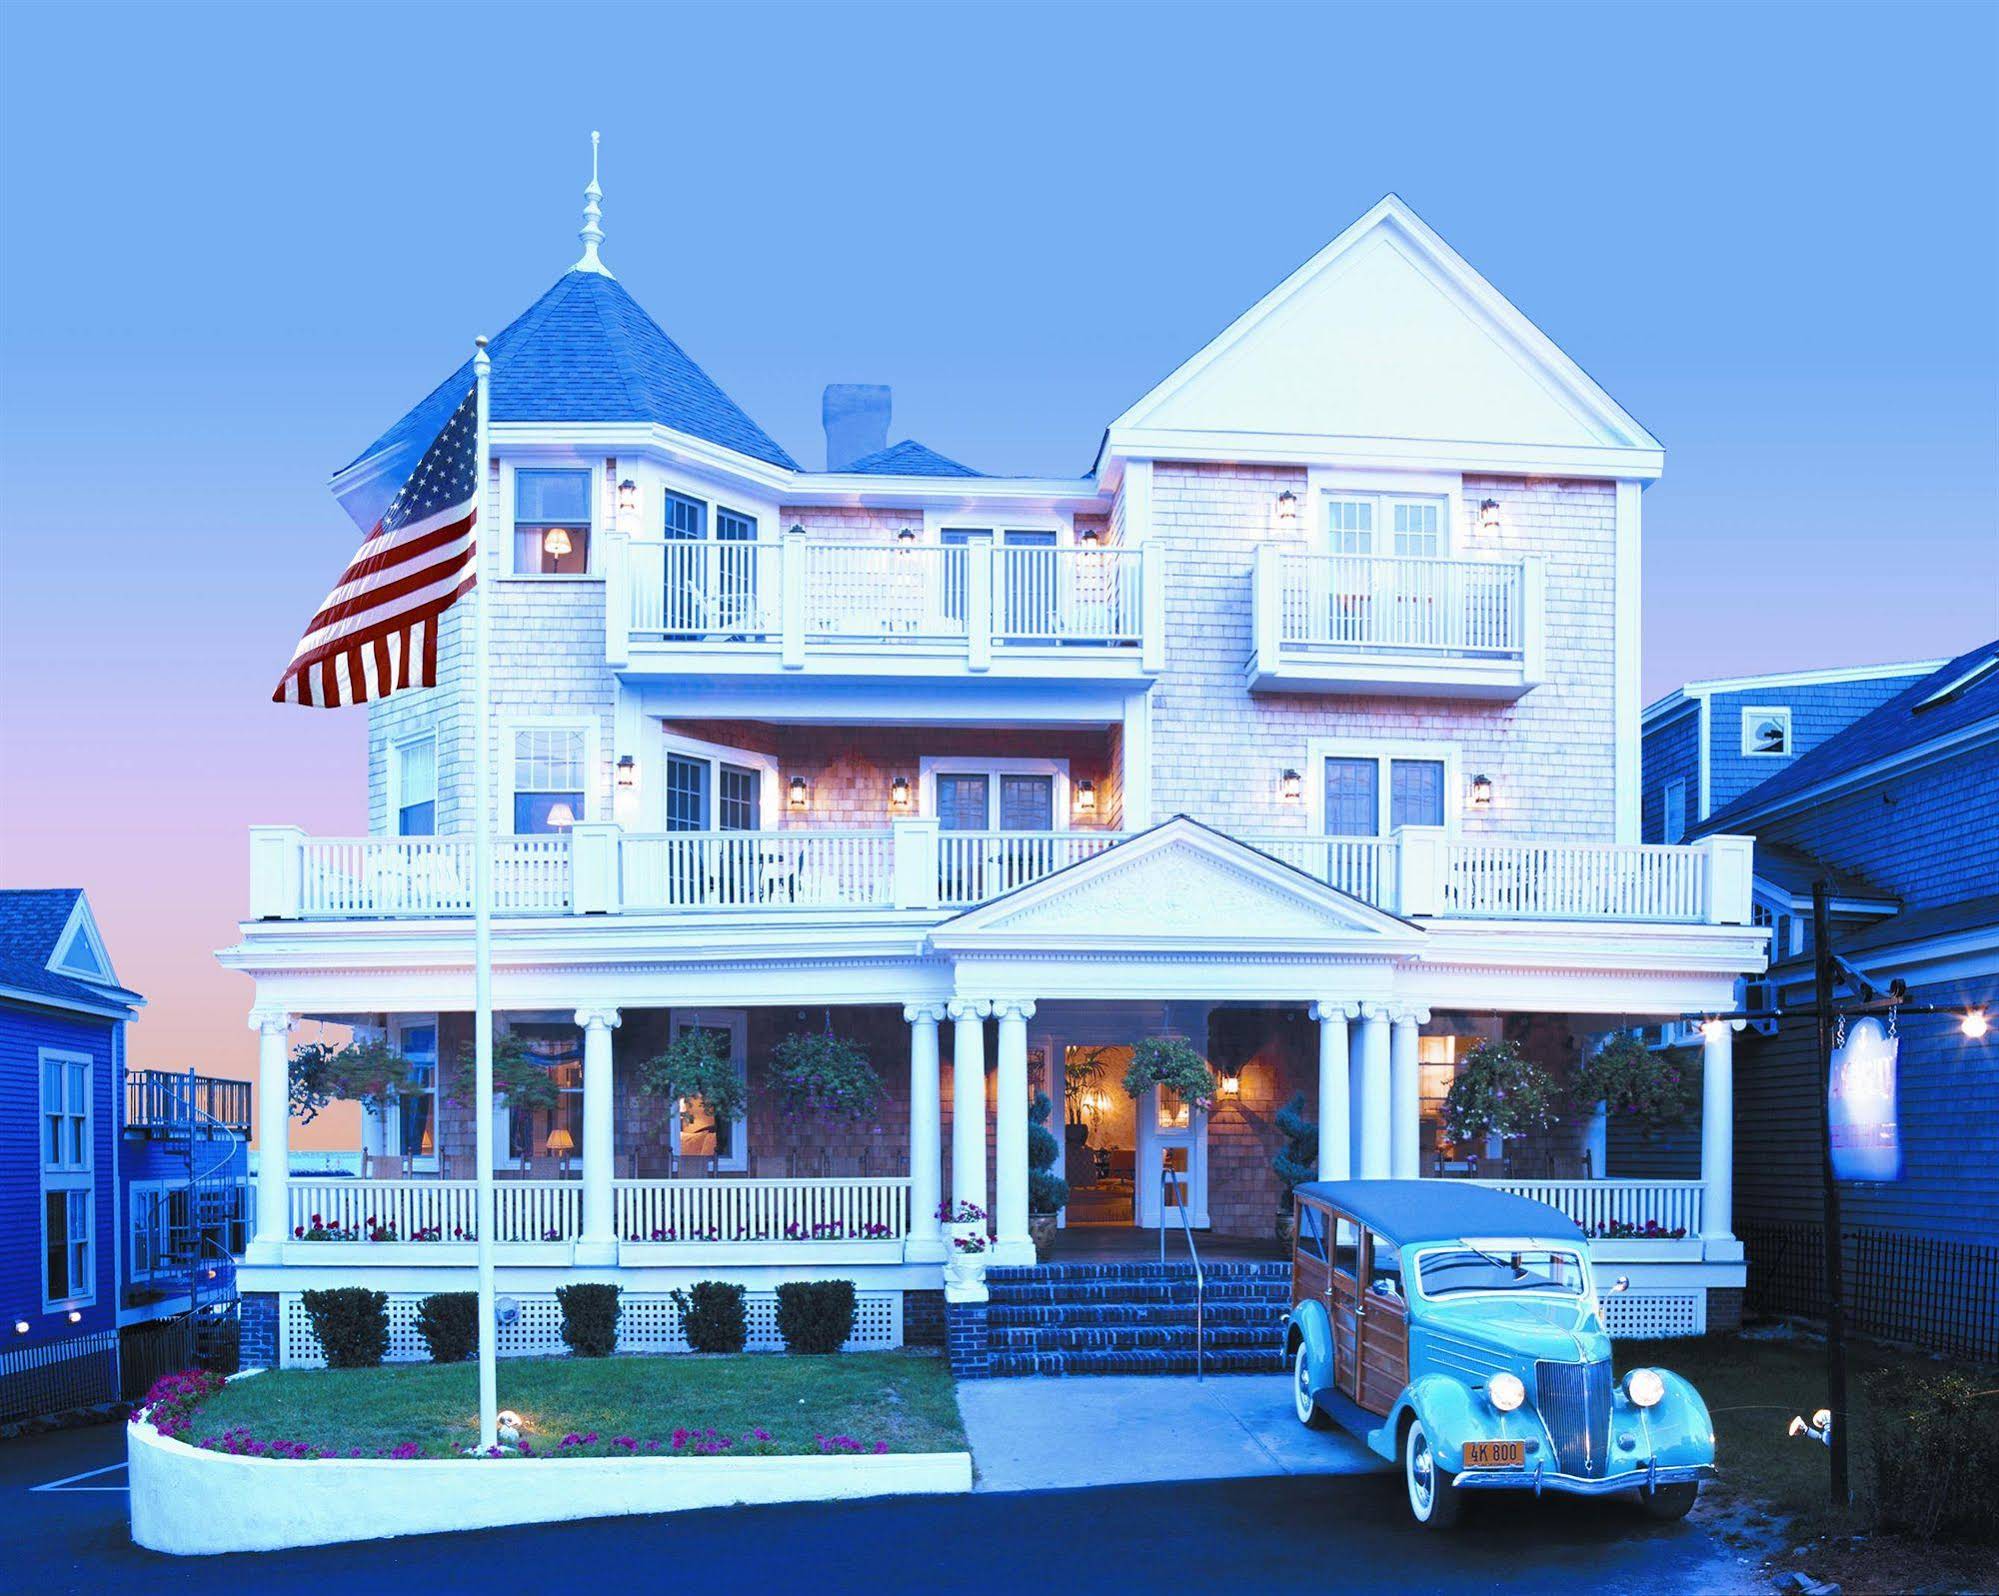 Anchor Inn Beach House